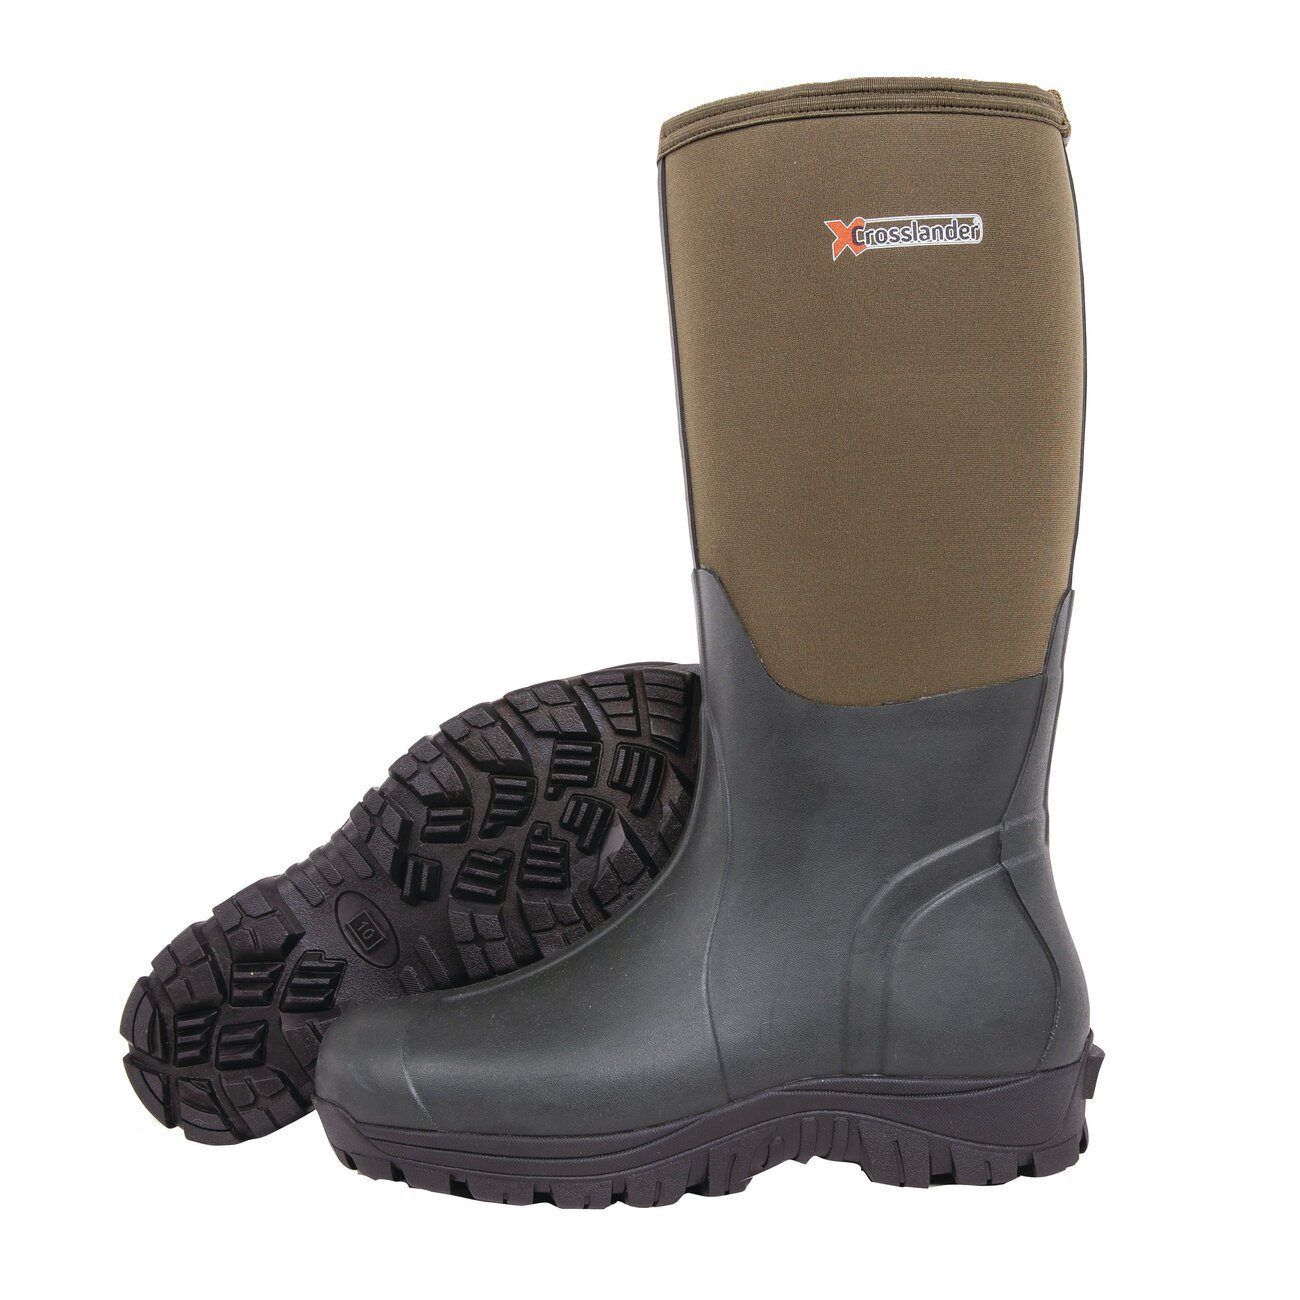 Crosslander® Winter Boots Doloi Reitstiefel | Reitstiefel